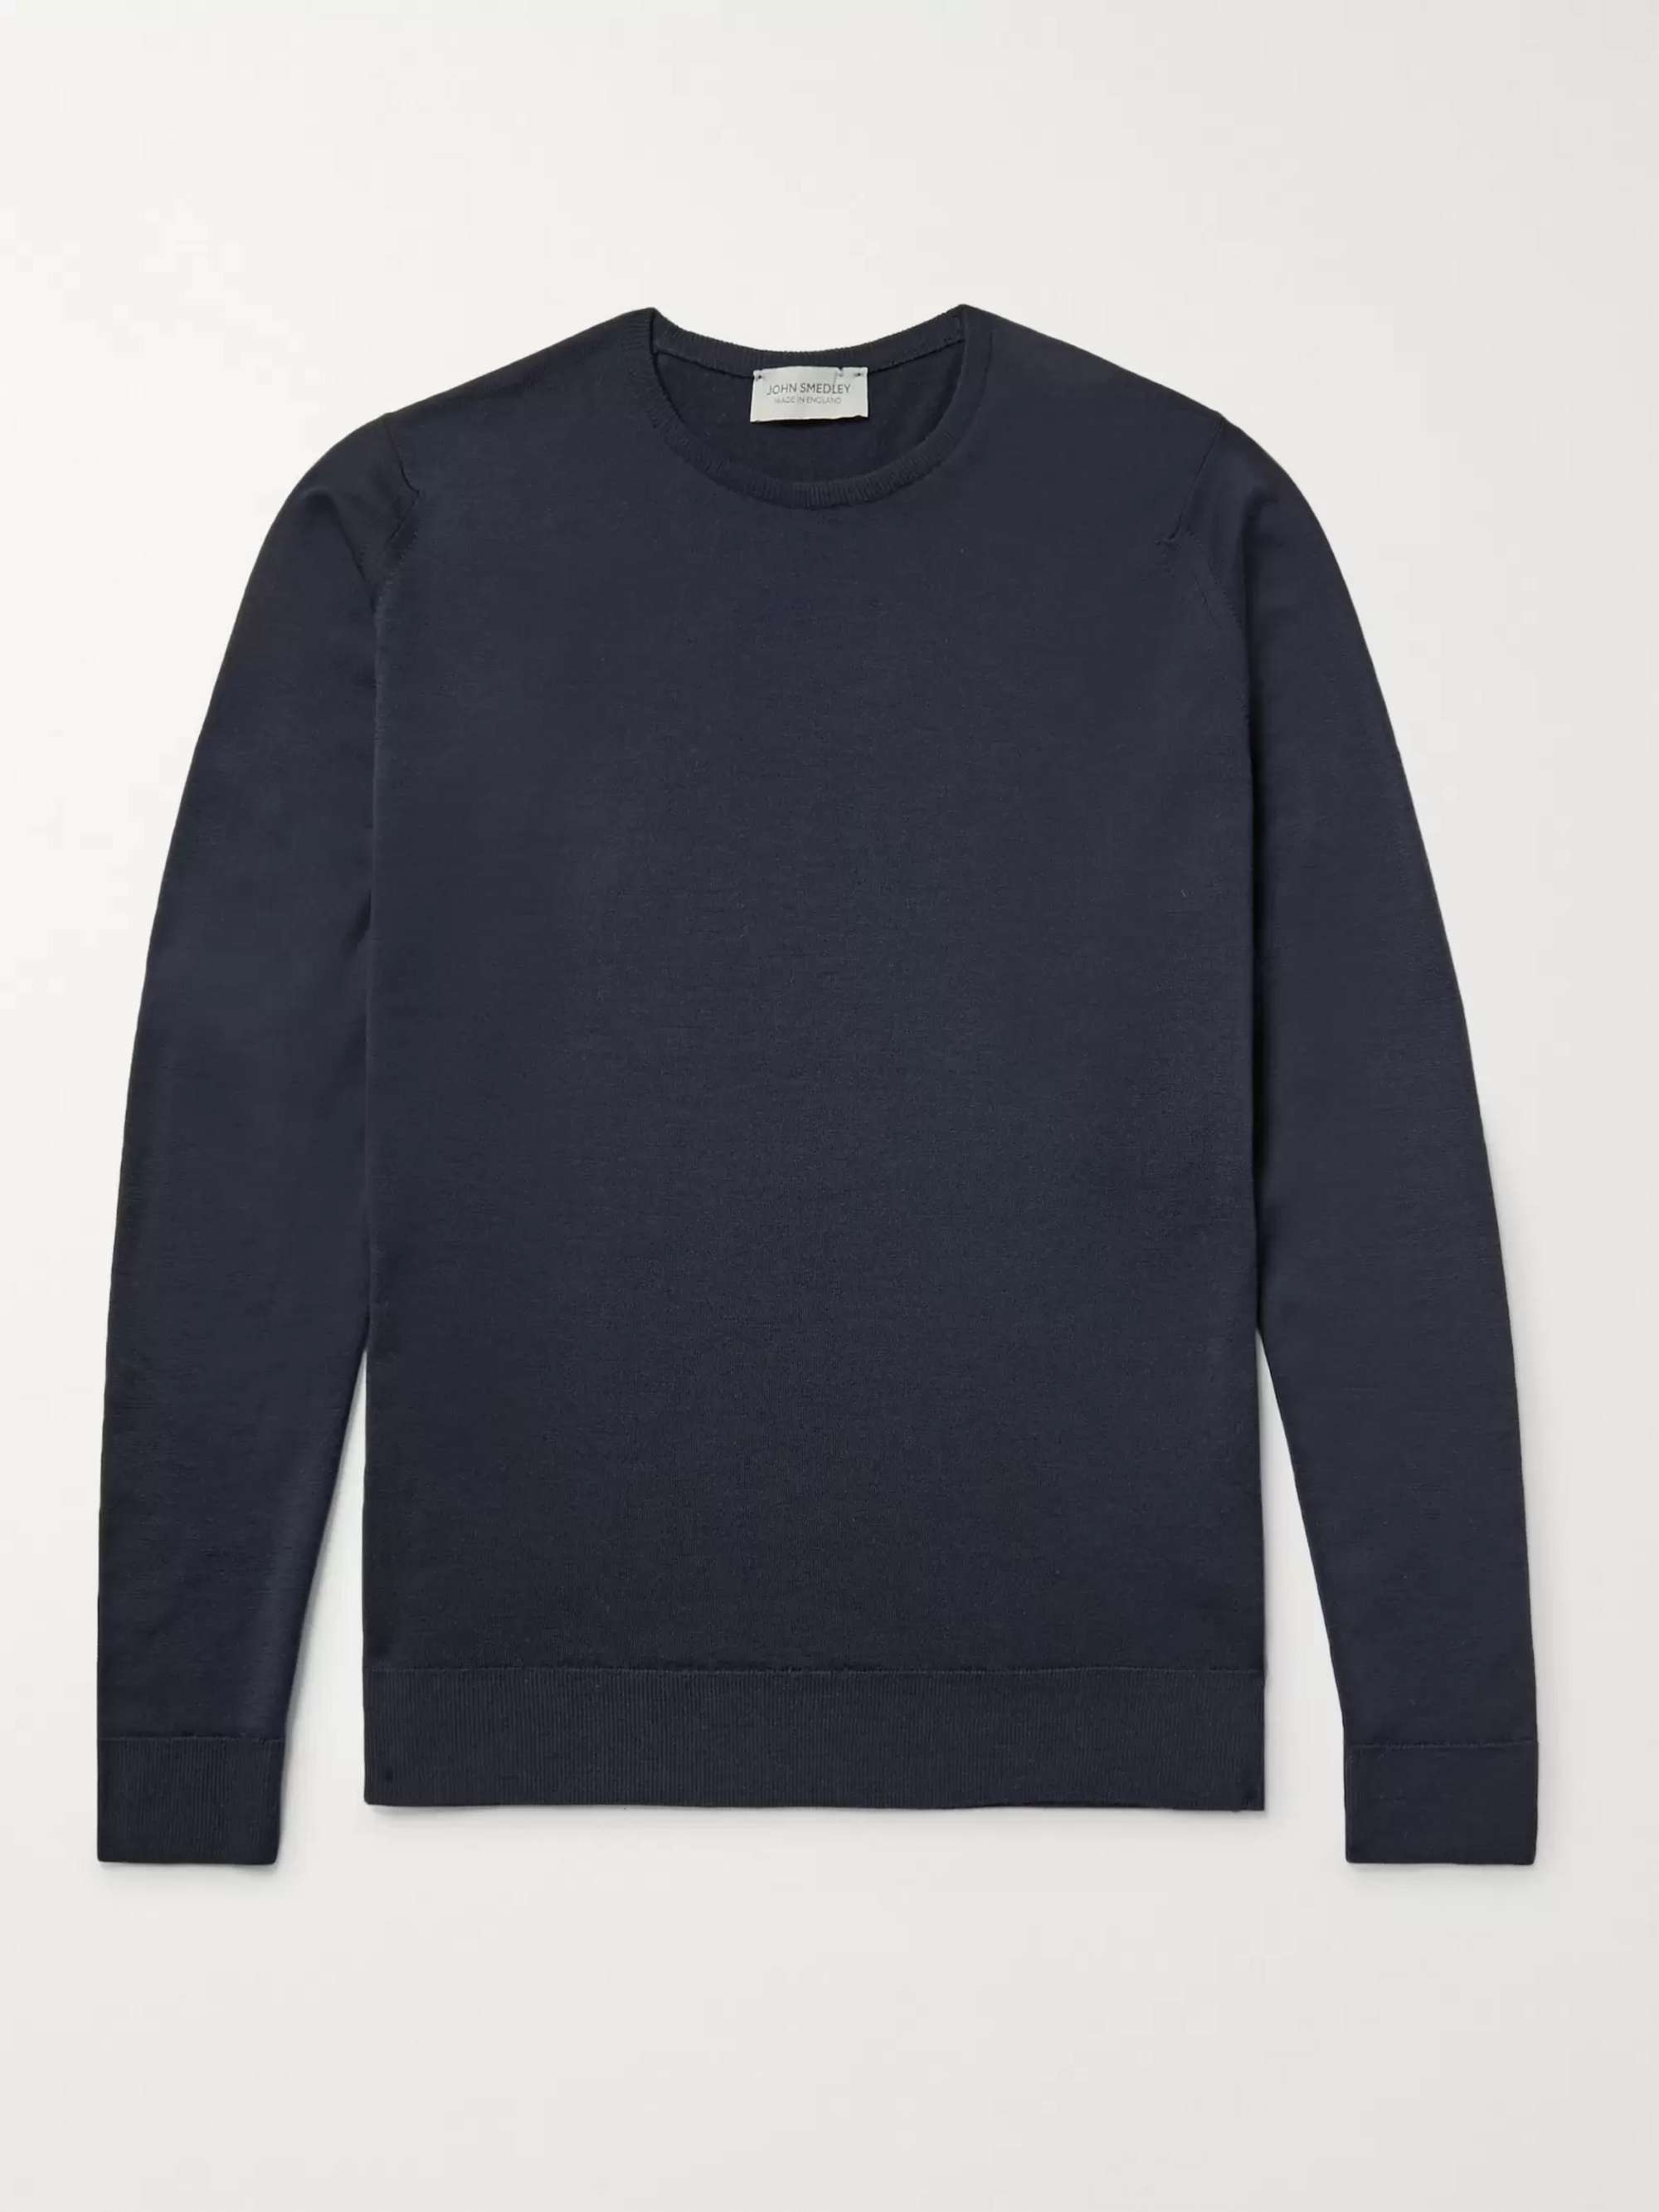 JOHN SMEDLEY Slim-Fit Merino Wool Sweater